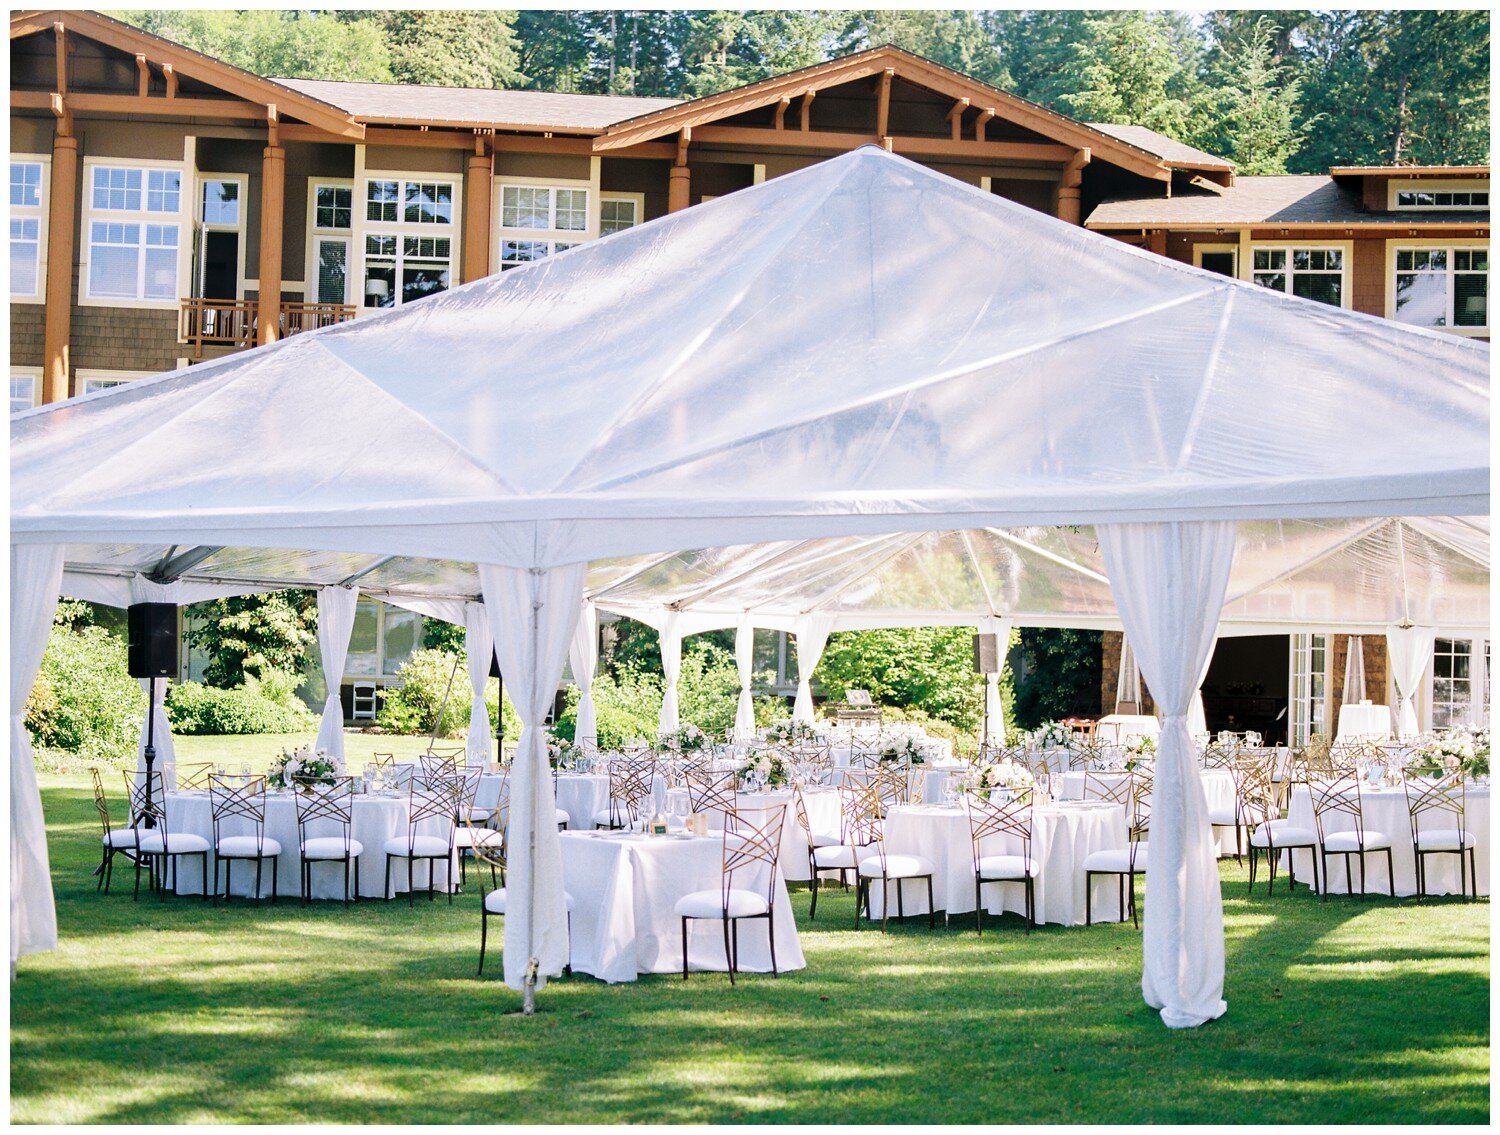 Alderbrook Resort outdoor wedding reception under a clear tent